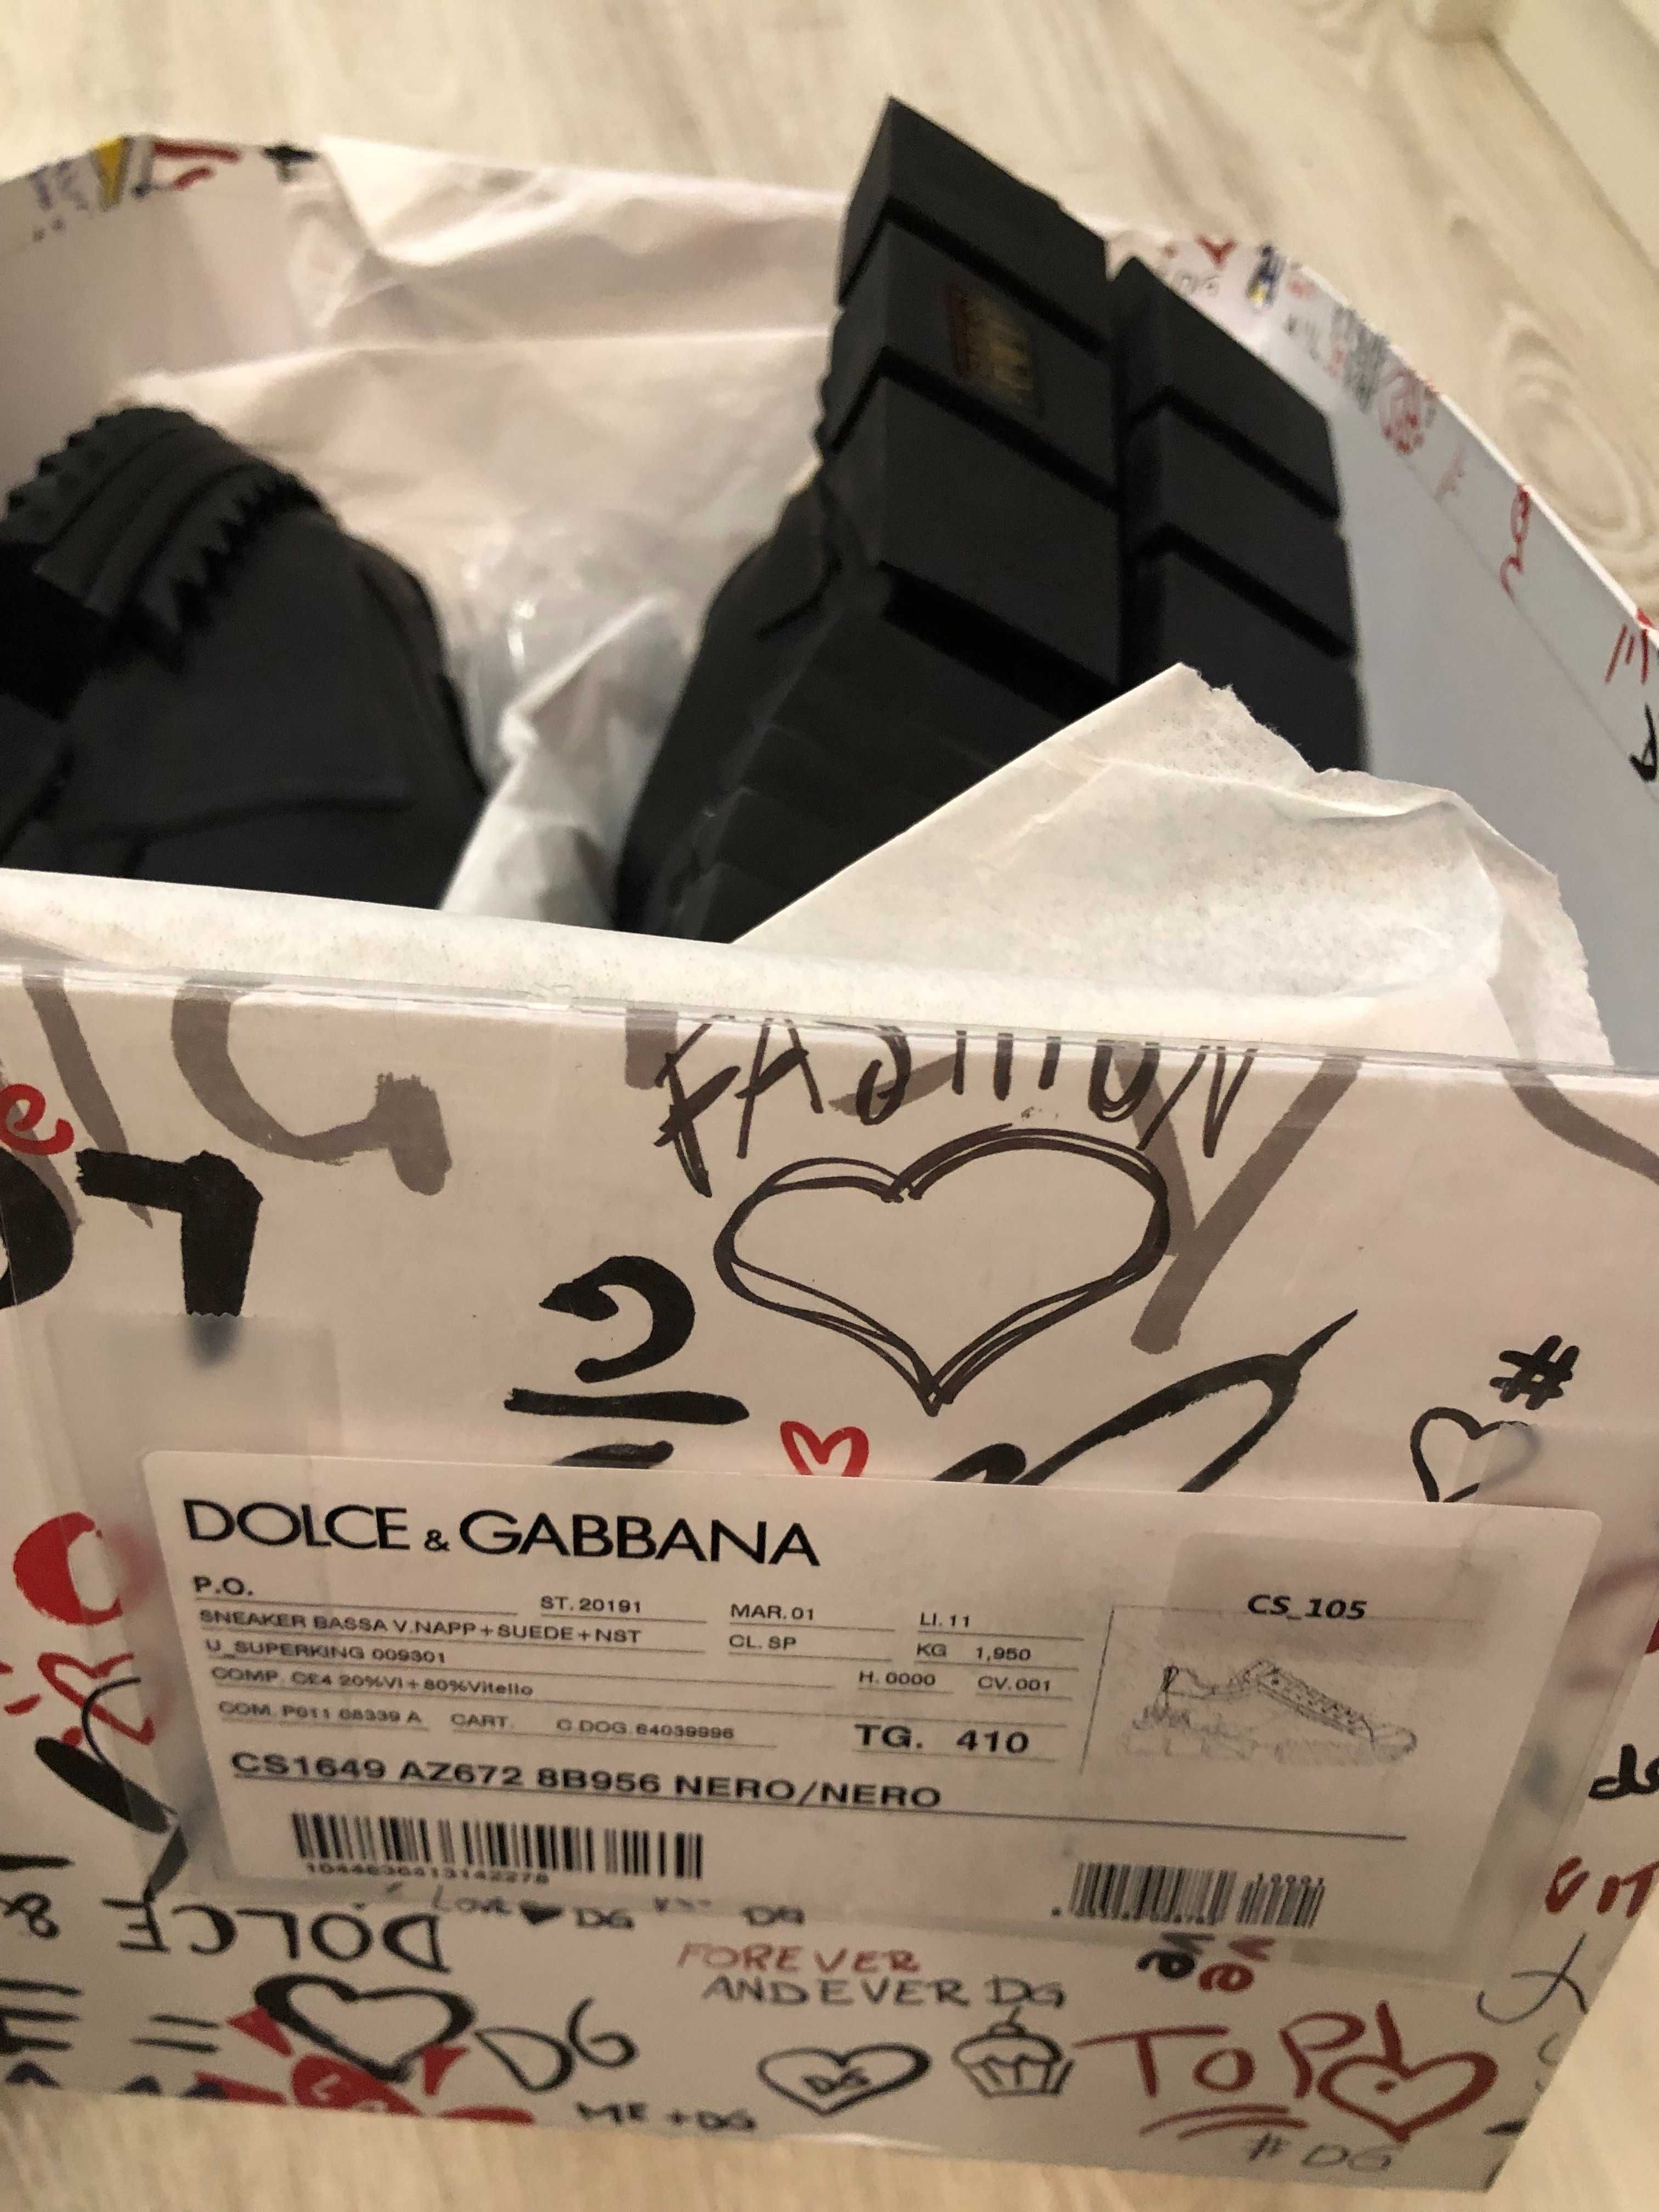 Dolce Gabbana  Super King 41 originali, full box, retail 895 euro